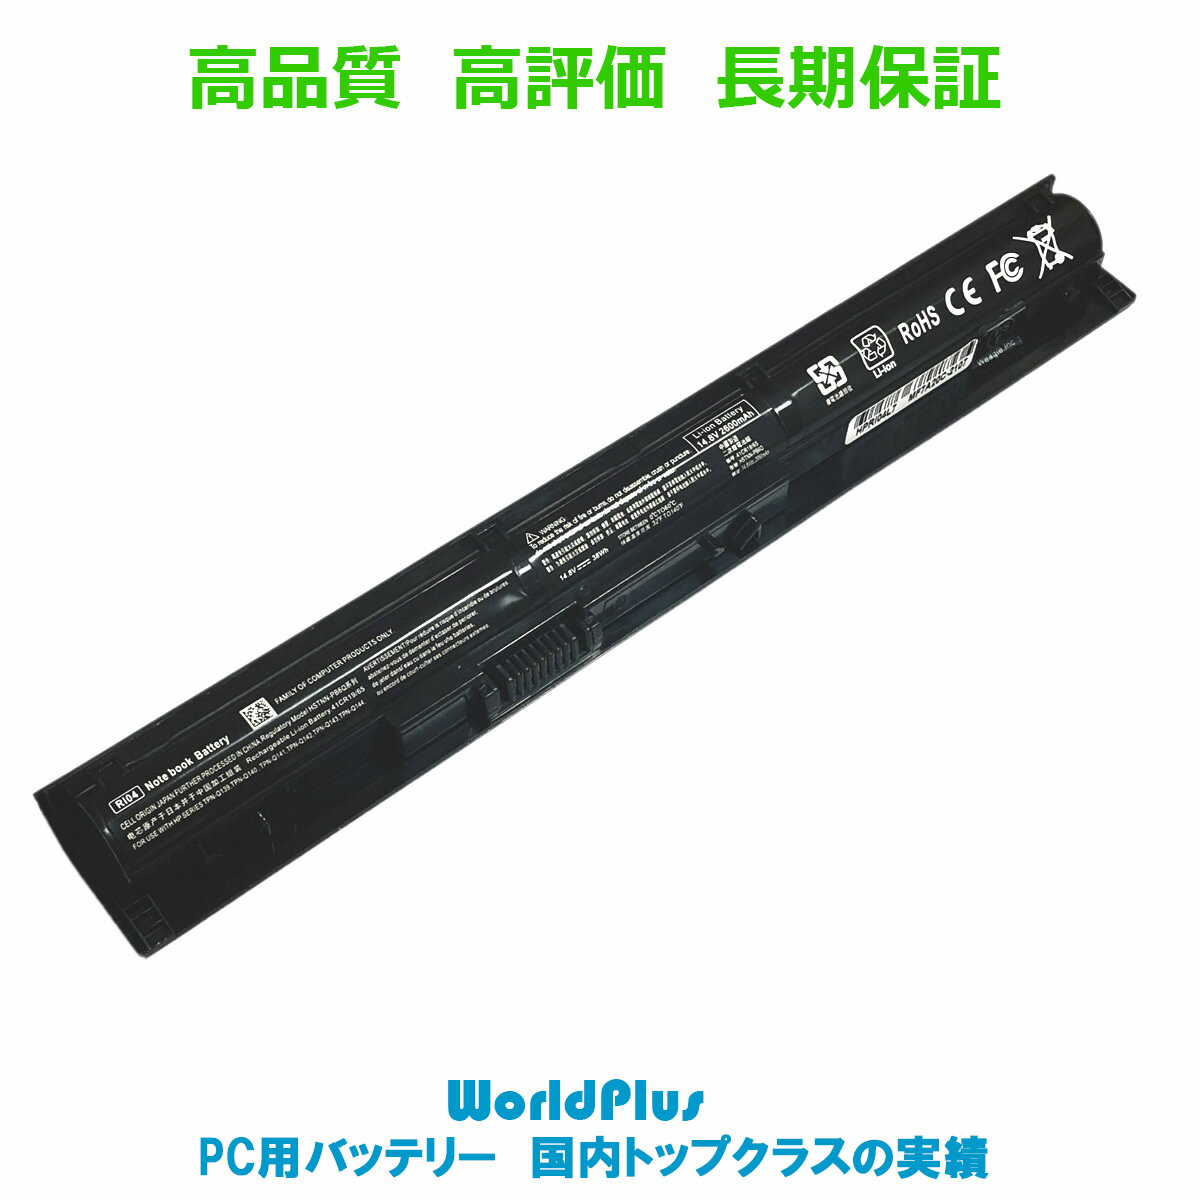 minshi 新品 Acer エイサー TravelMate 6595G 互換バッテリー 対応 高品質交換用電池パック PSE認証 1年間保証 7800mAh